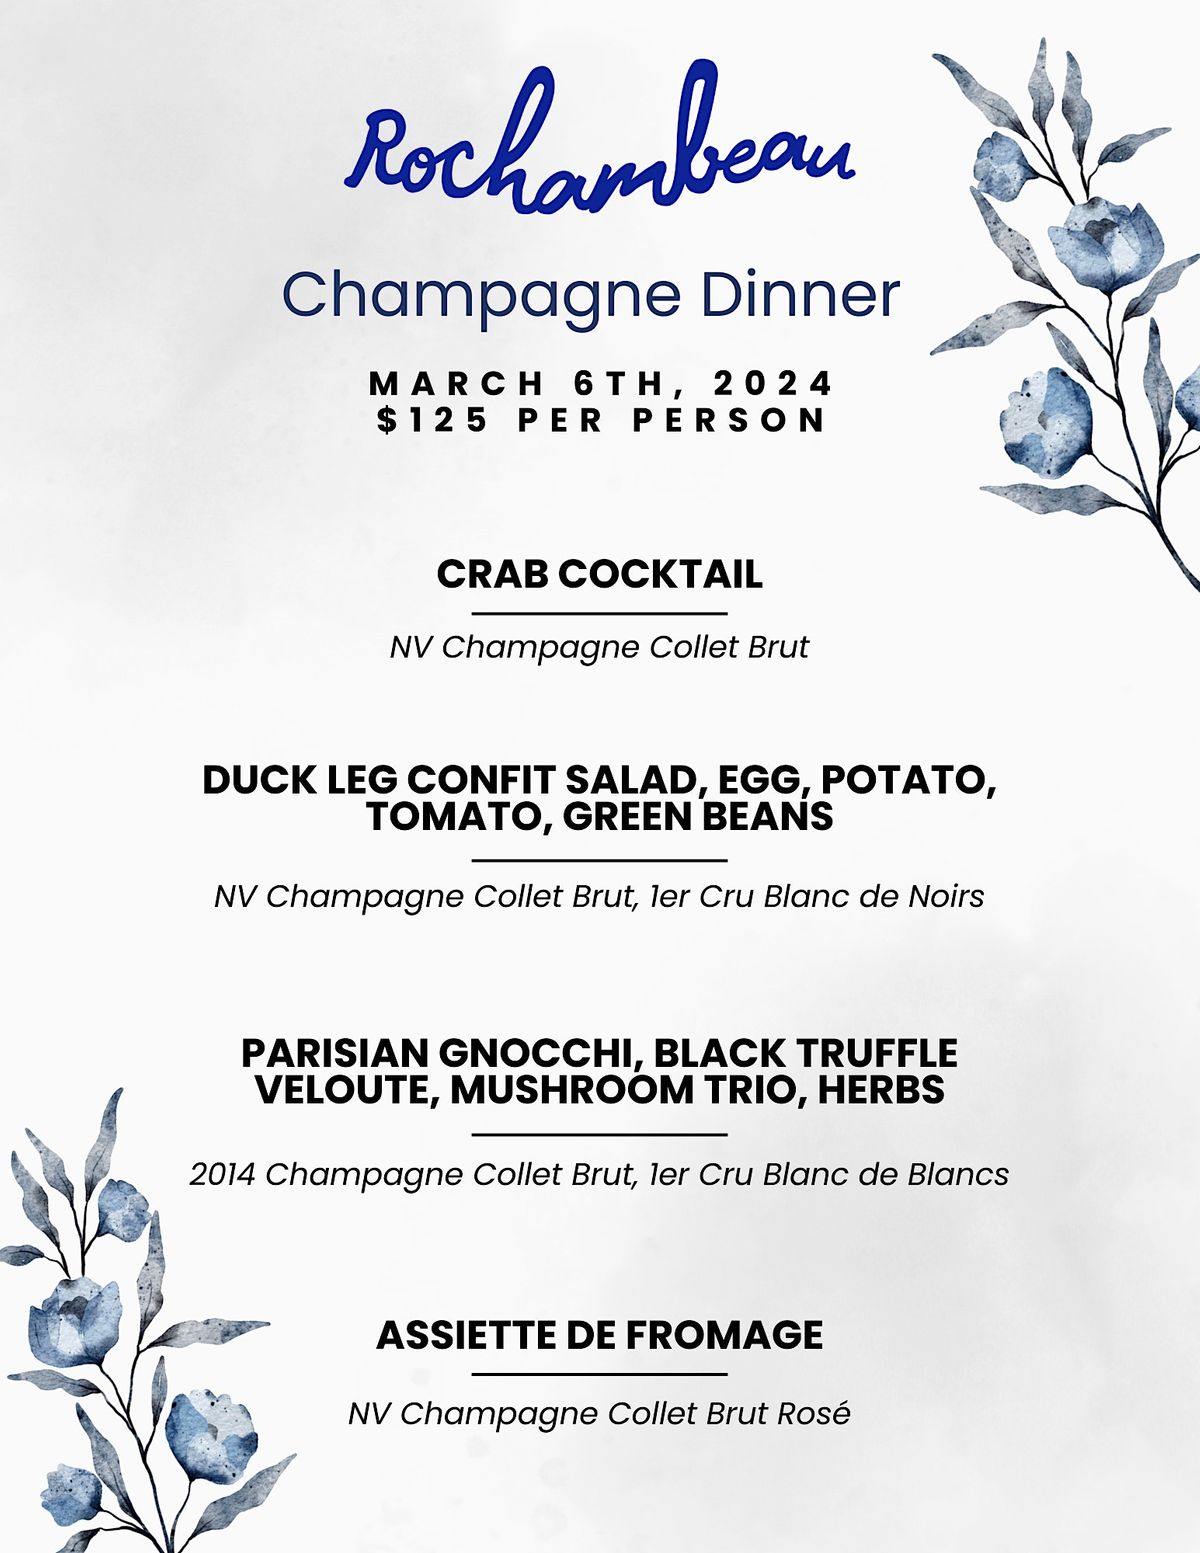 Champagne Dinner at Rochambeau